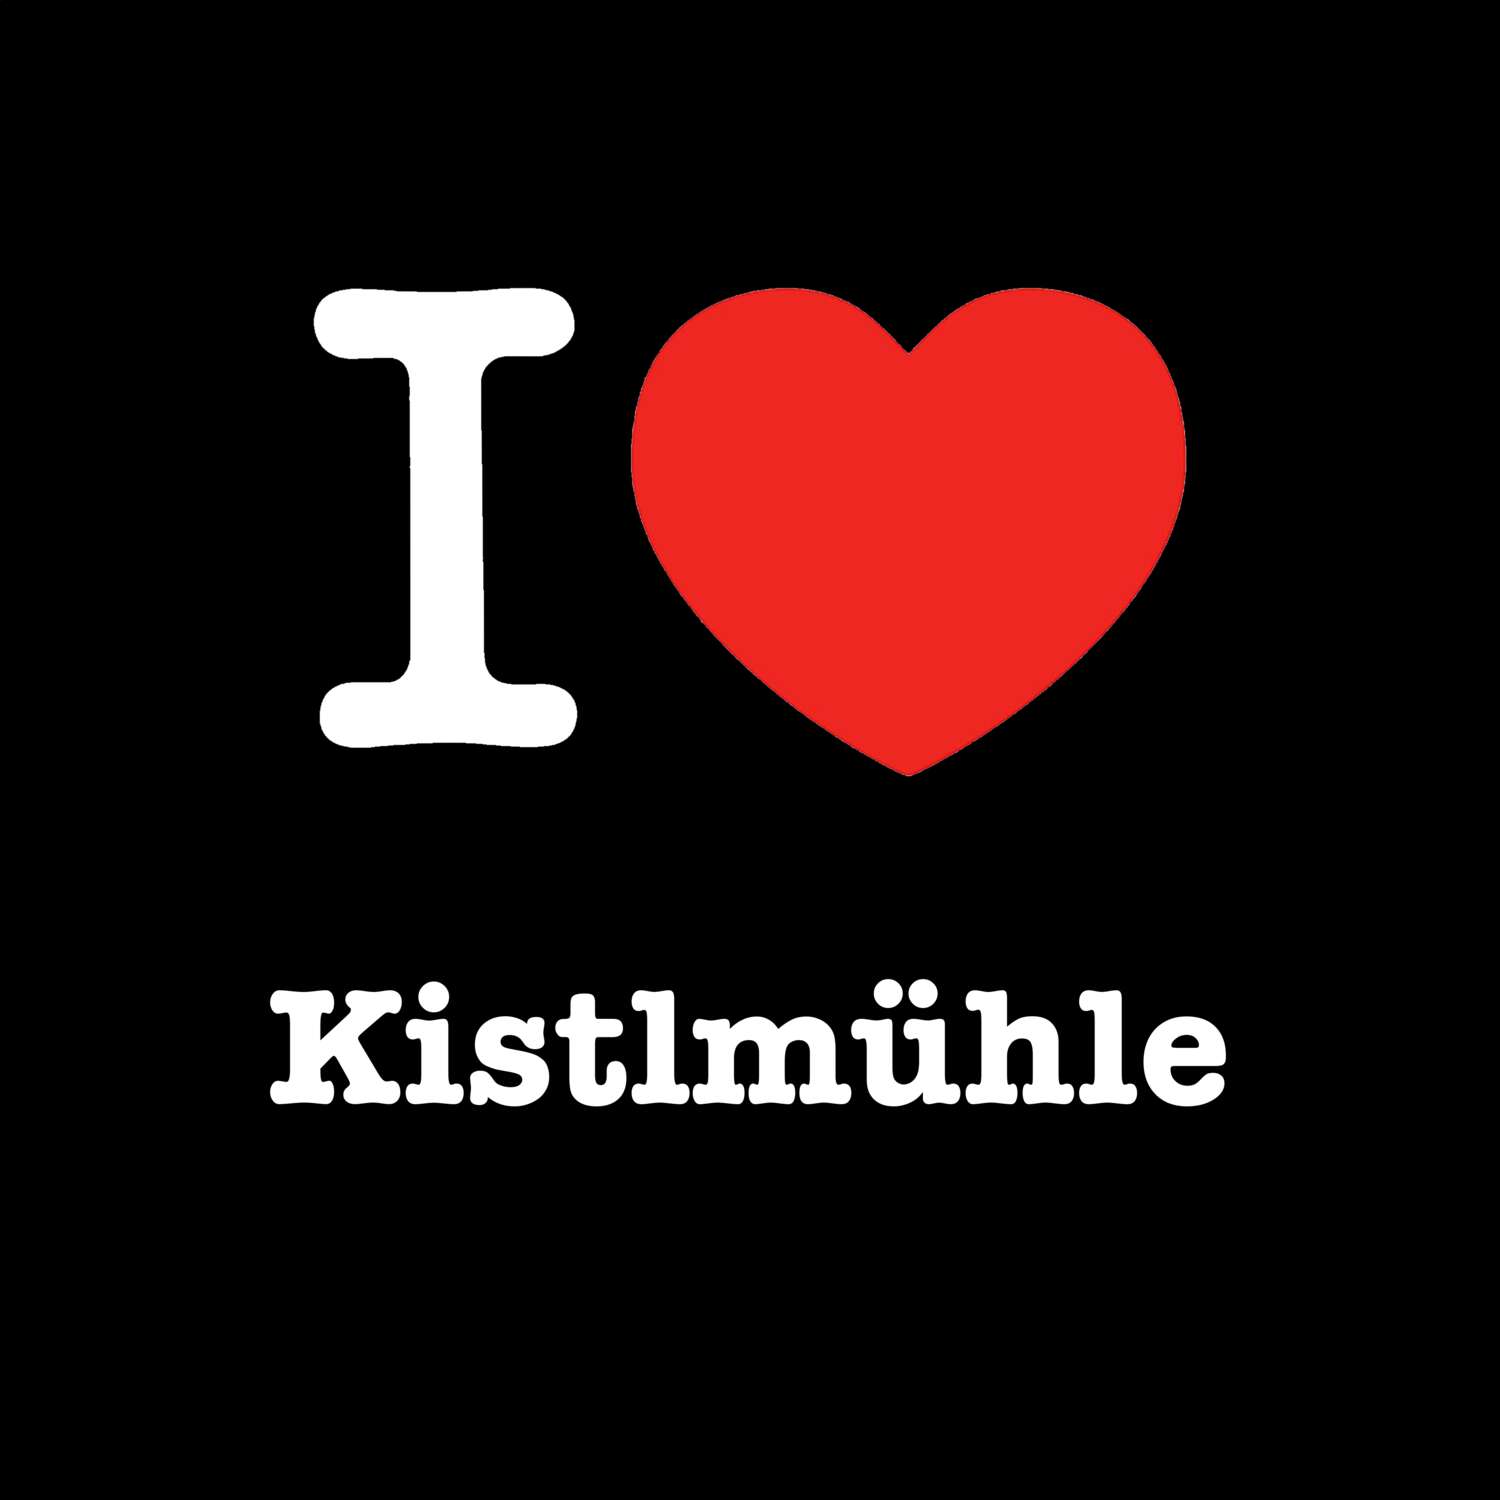 Kistlmühle T-Shirt »I love«